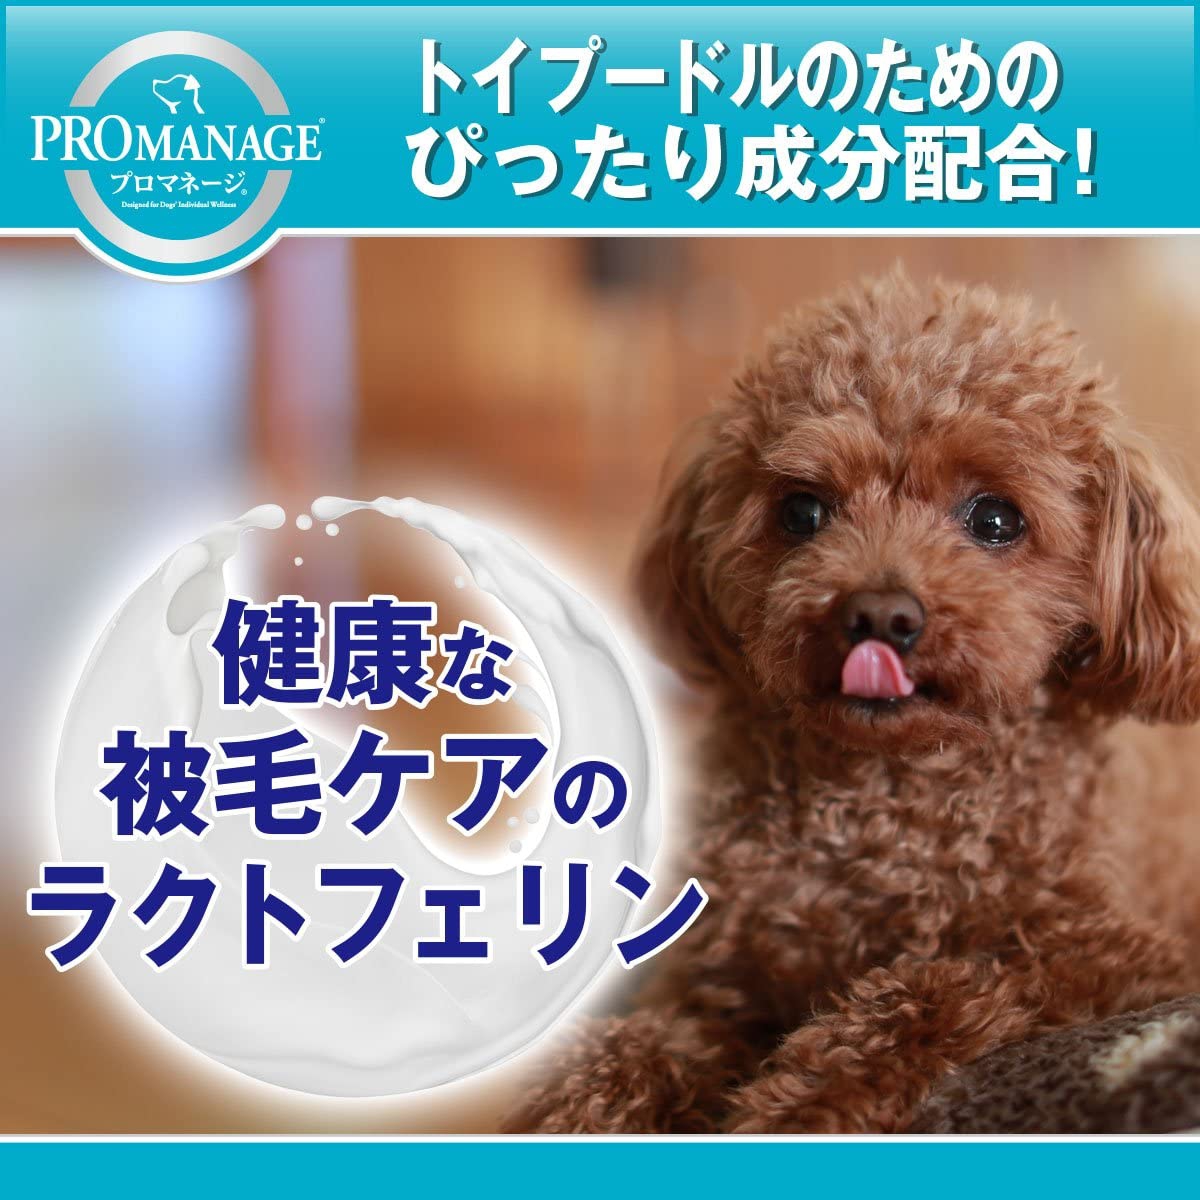 PROMANAGE(プロマネージ) 犬種別シリーズ トイプードル専用の商品画像3 